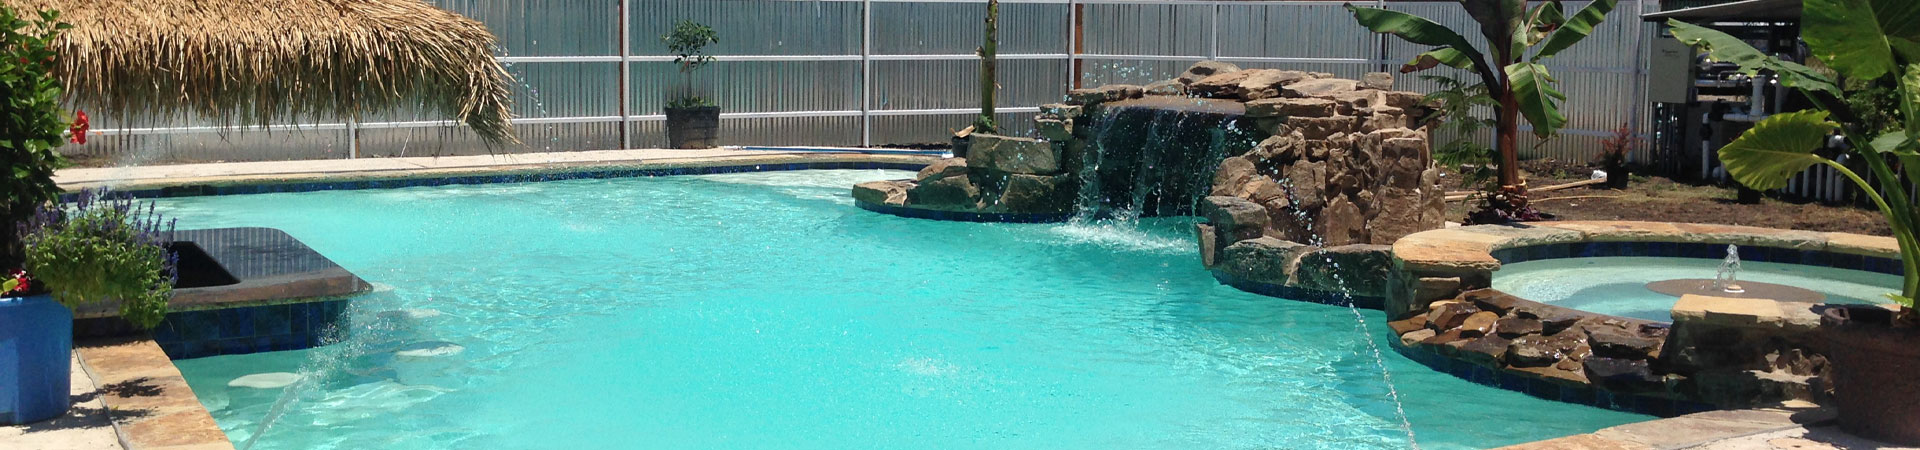 Inground Swimming Pools in Mansfield, TX, Glenn Heights, Red Oak, TX